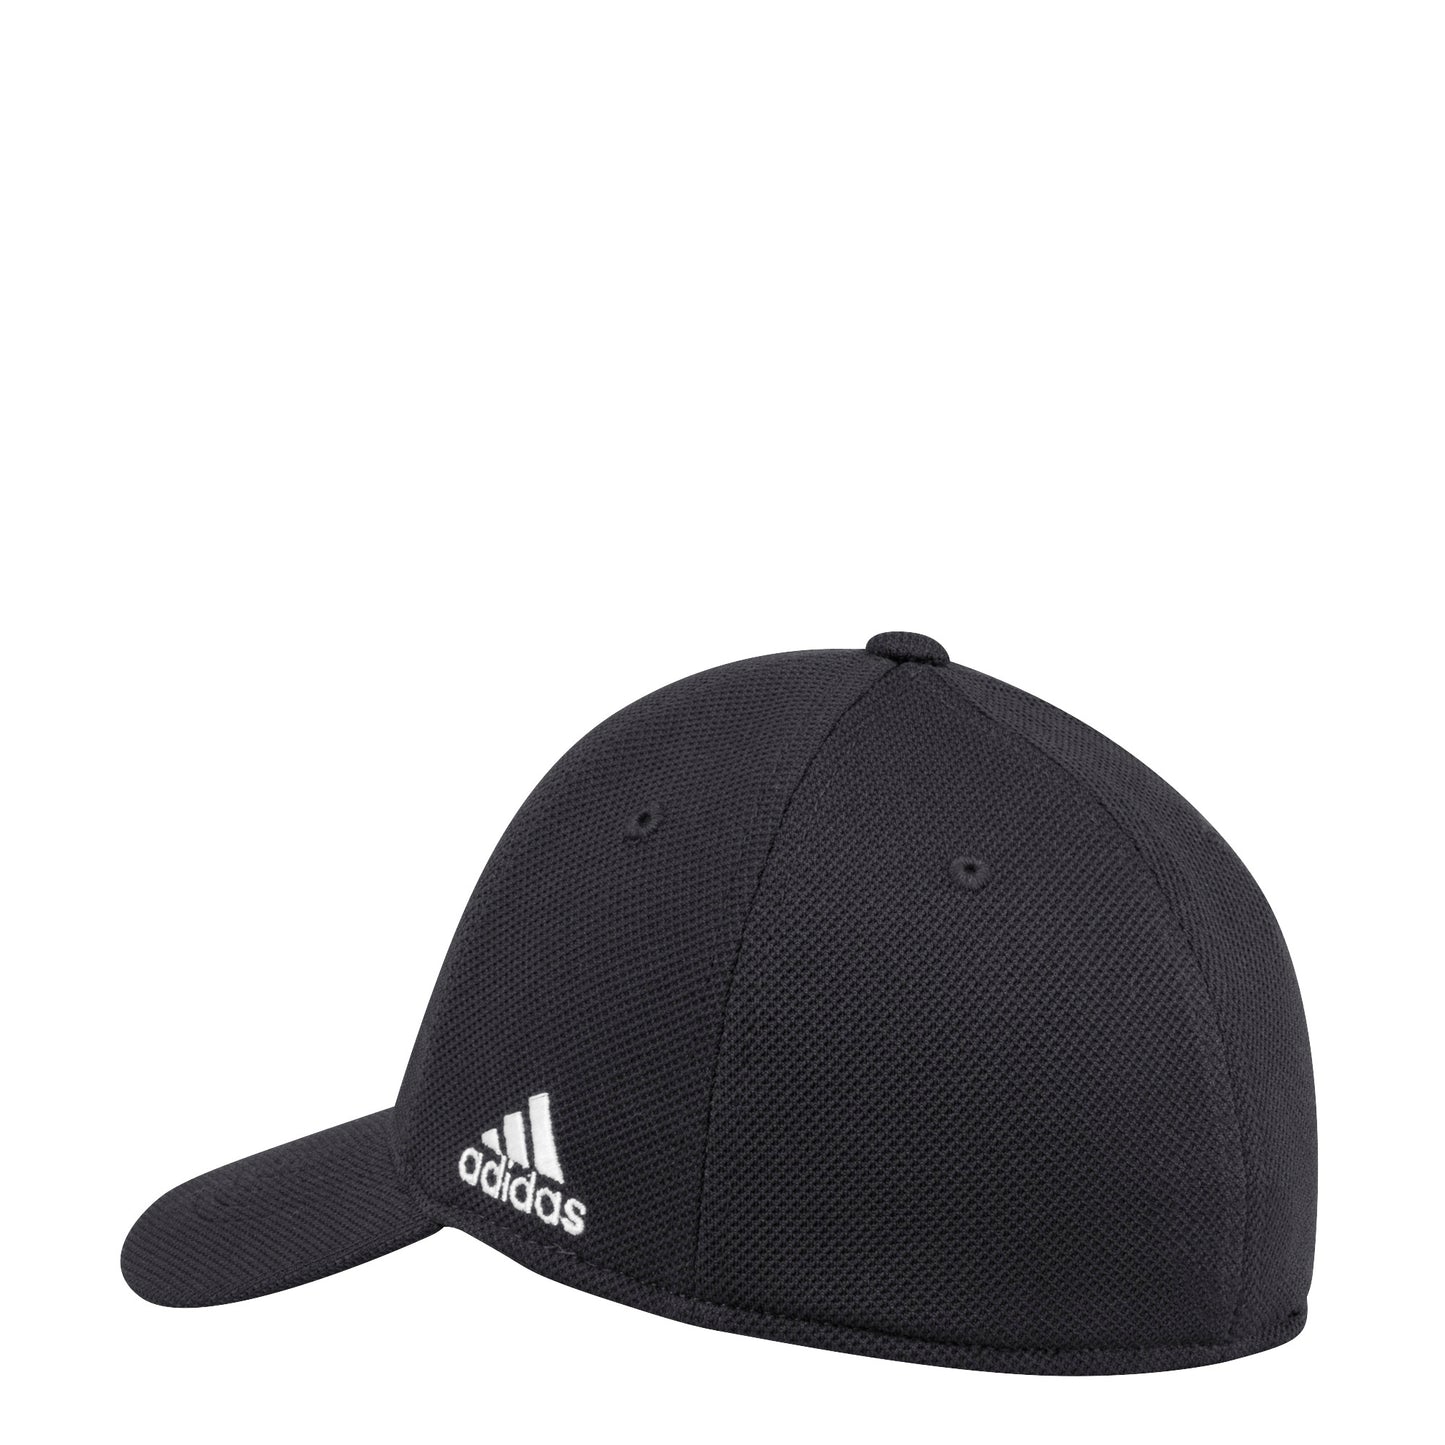 Men’s Chicago Blackhawks Authentic Collection Foxtrot Structured Flex Fit Hat By Adidas